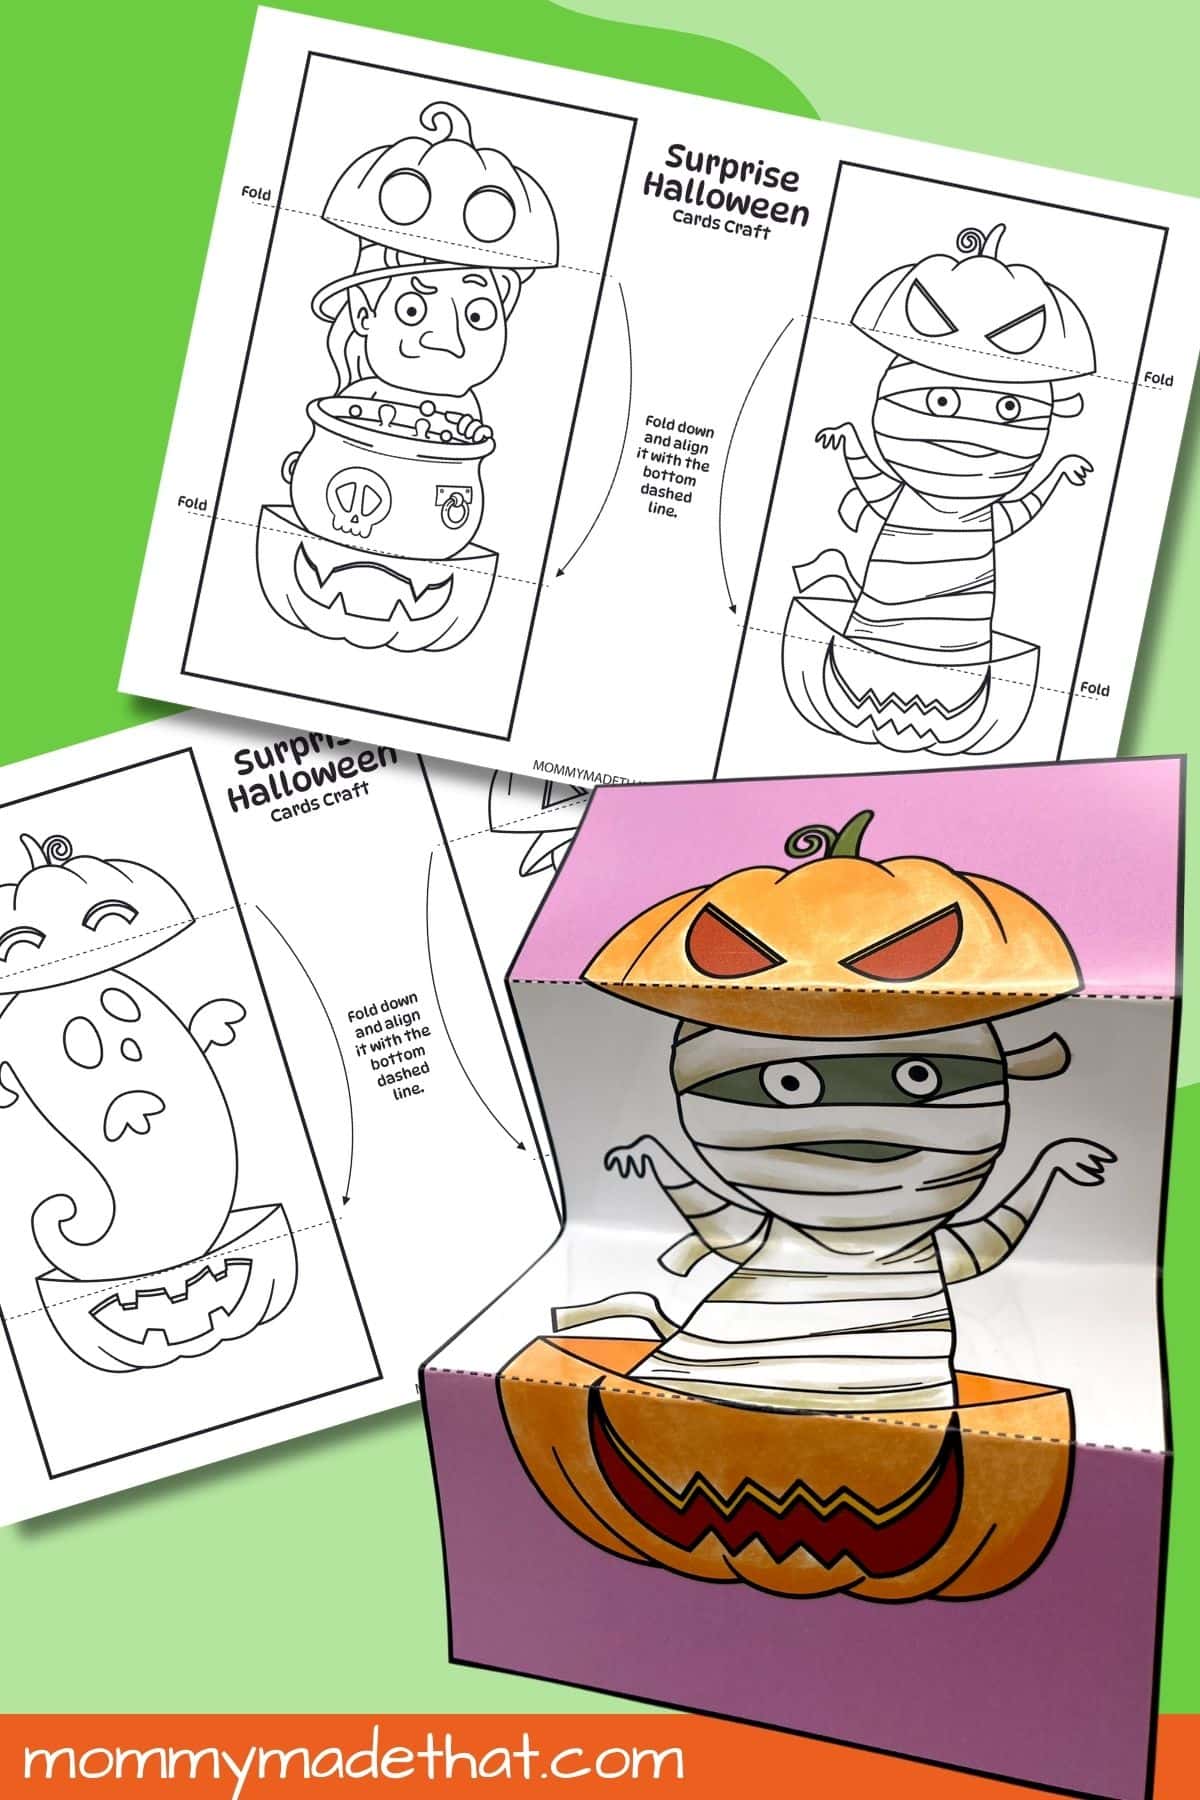 Halloween Surprise Cards: A Fun Coloring Activity